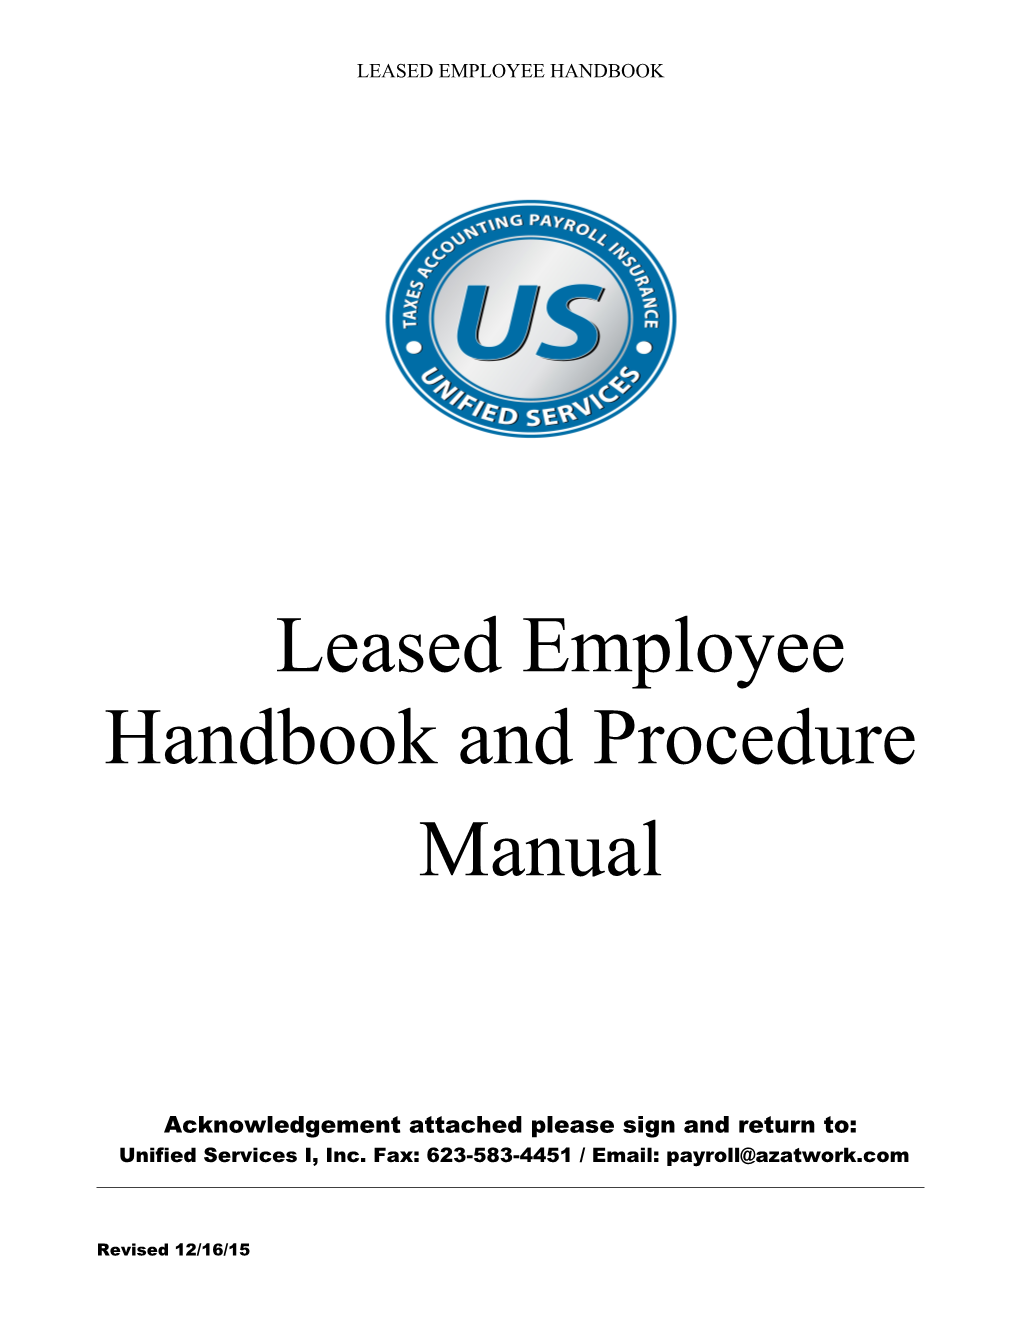 Leased Employee Handbook and Procedure